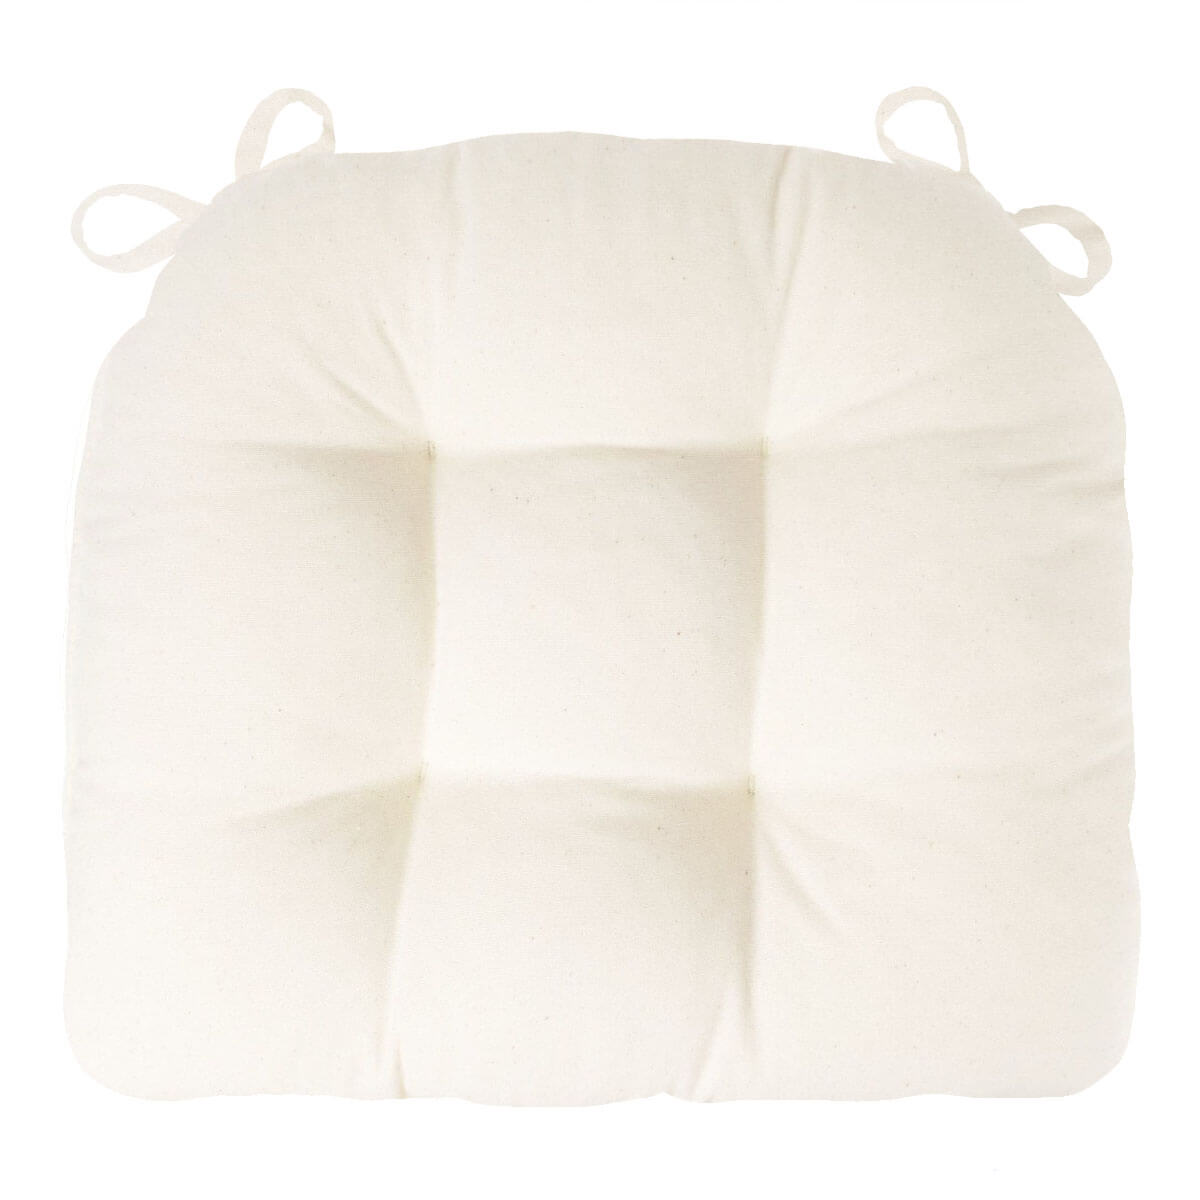 12 x 3 White Foam Round Stool - Seat Chair Upholstery Foam Cushion P